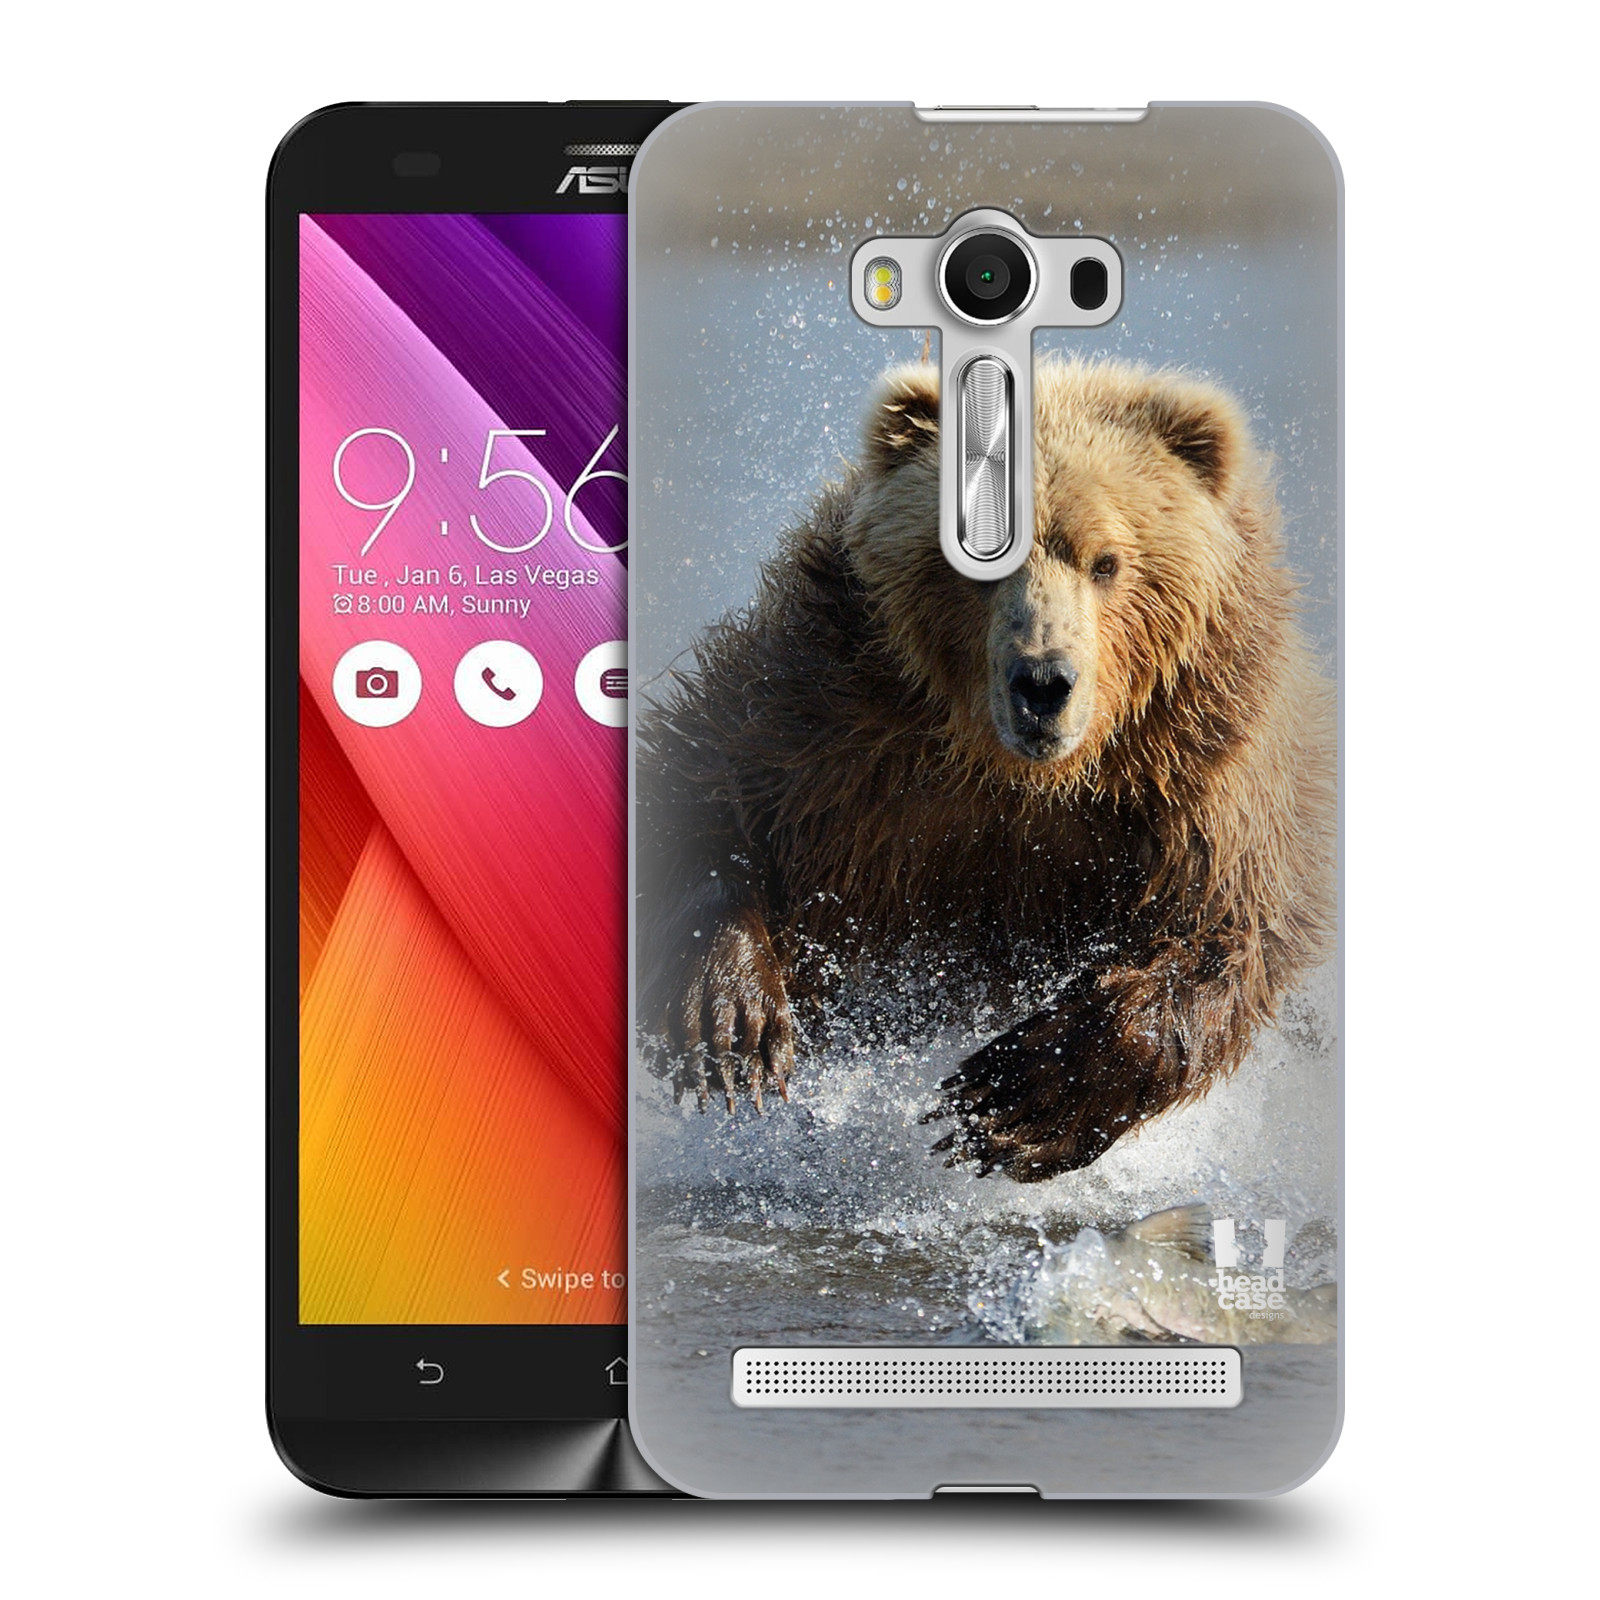 HEAD CASE plastový obal na mobil Asus Zenfone 2 LASER (5,5 displej ZE550KL) vzor Divočina, Divoký život a zvířata foto MEDVĚD GRIZZLY HŇEDÁ